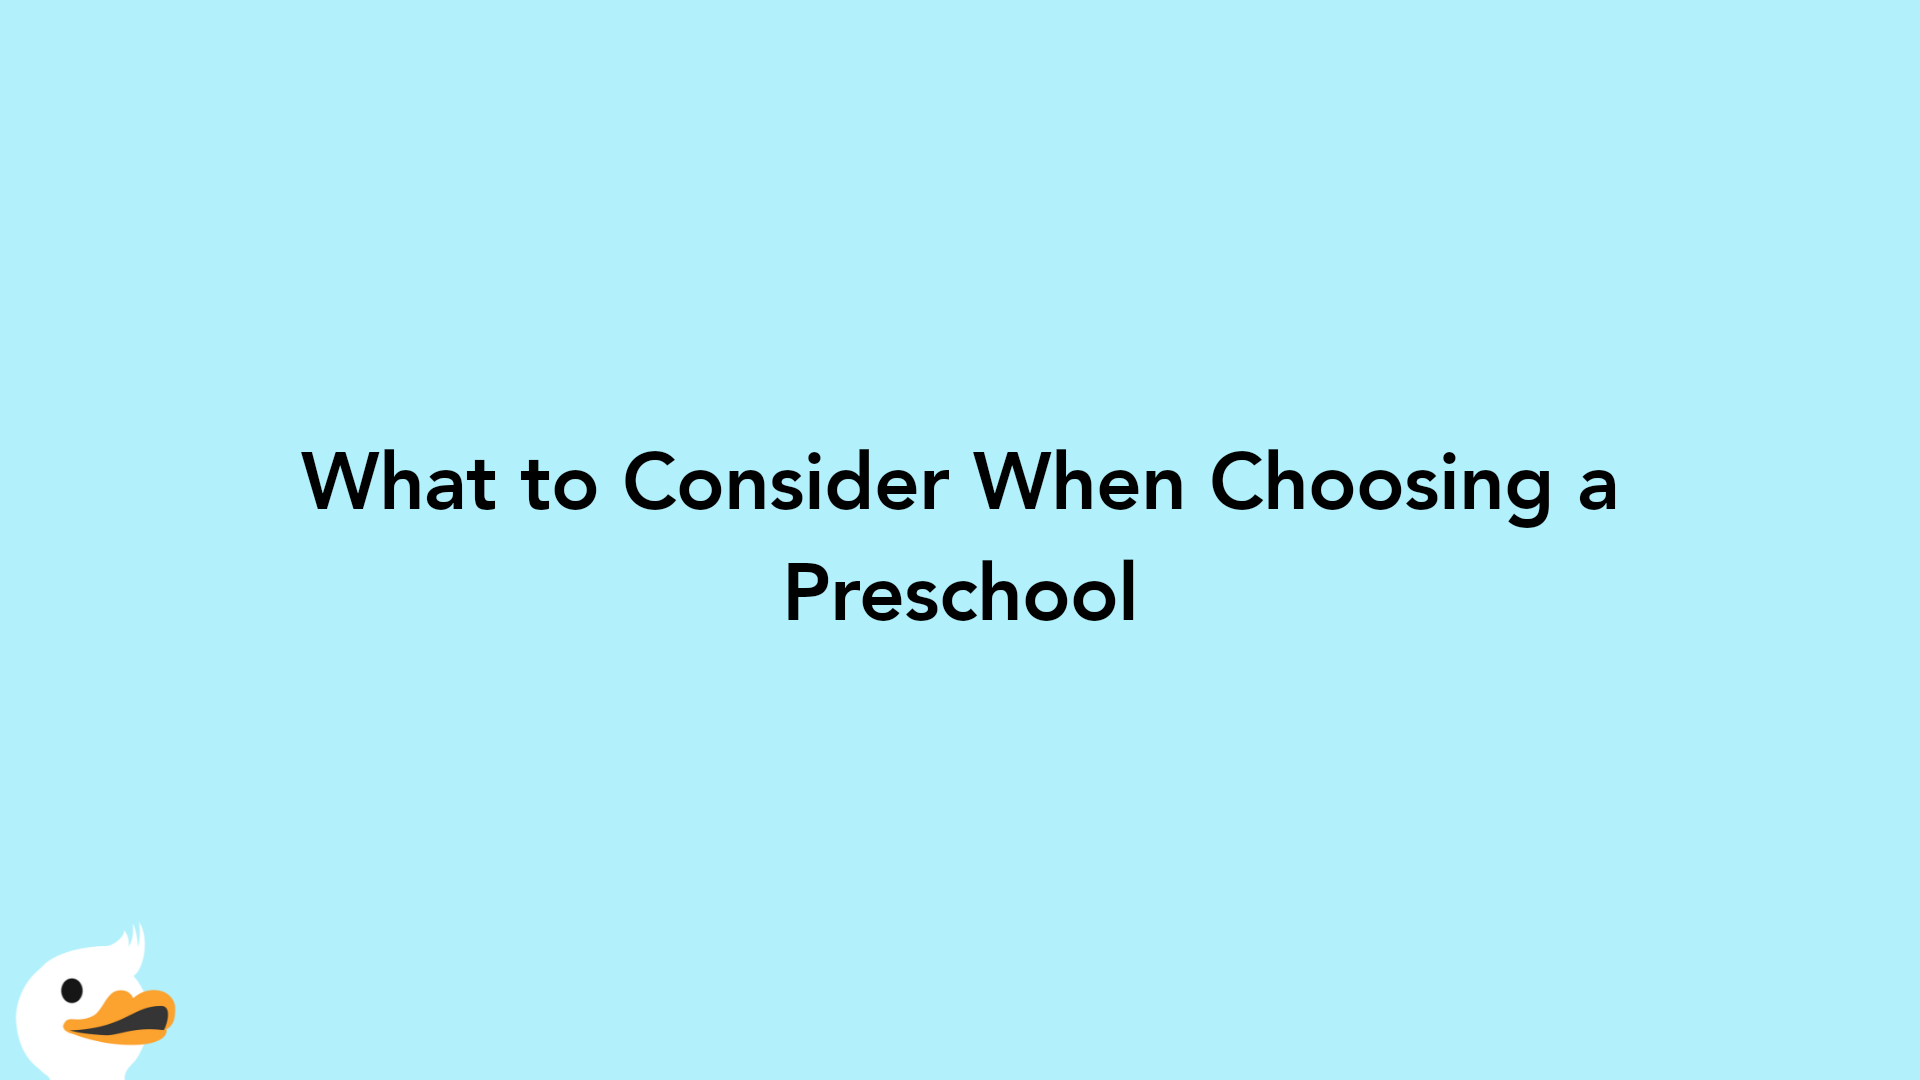 What to Consider When Choosing a Preschool